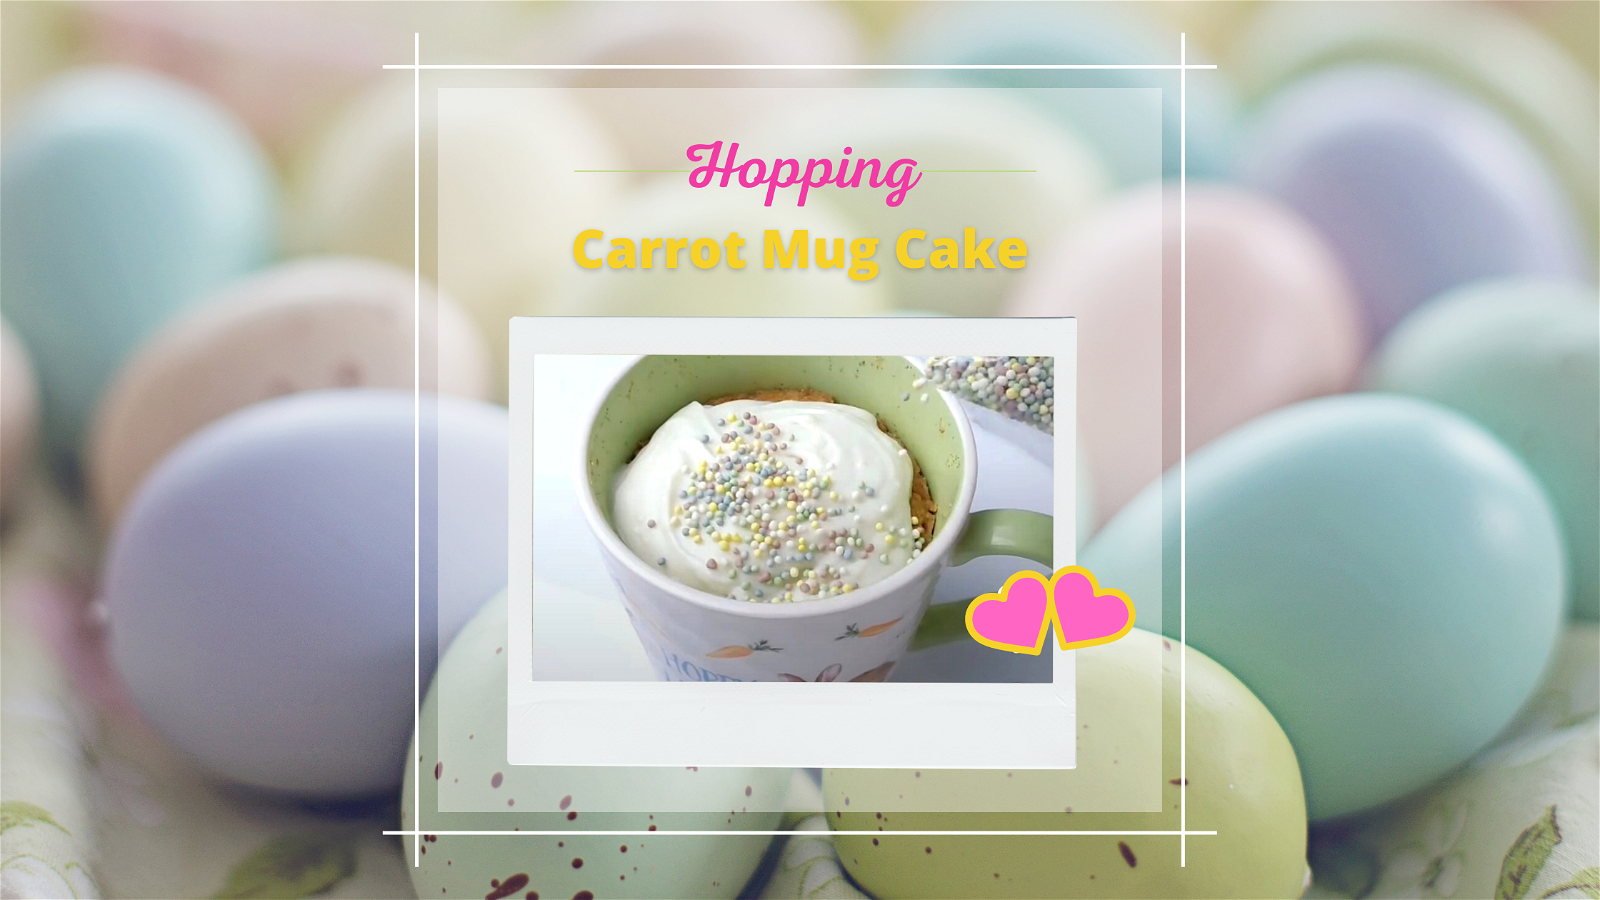 Image of Hopping Carrot Mug Cake